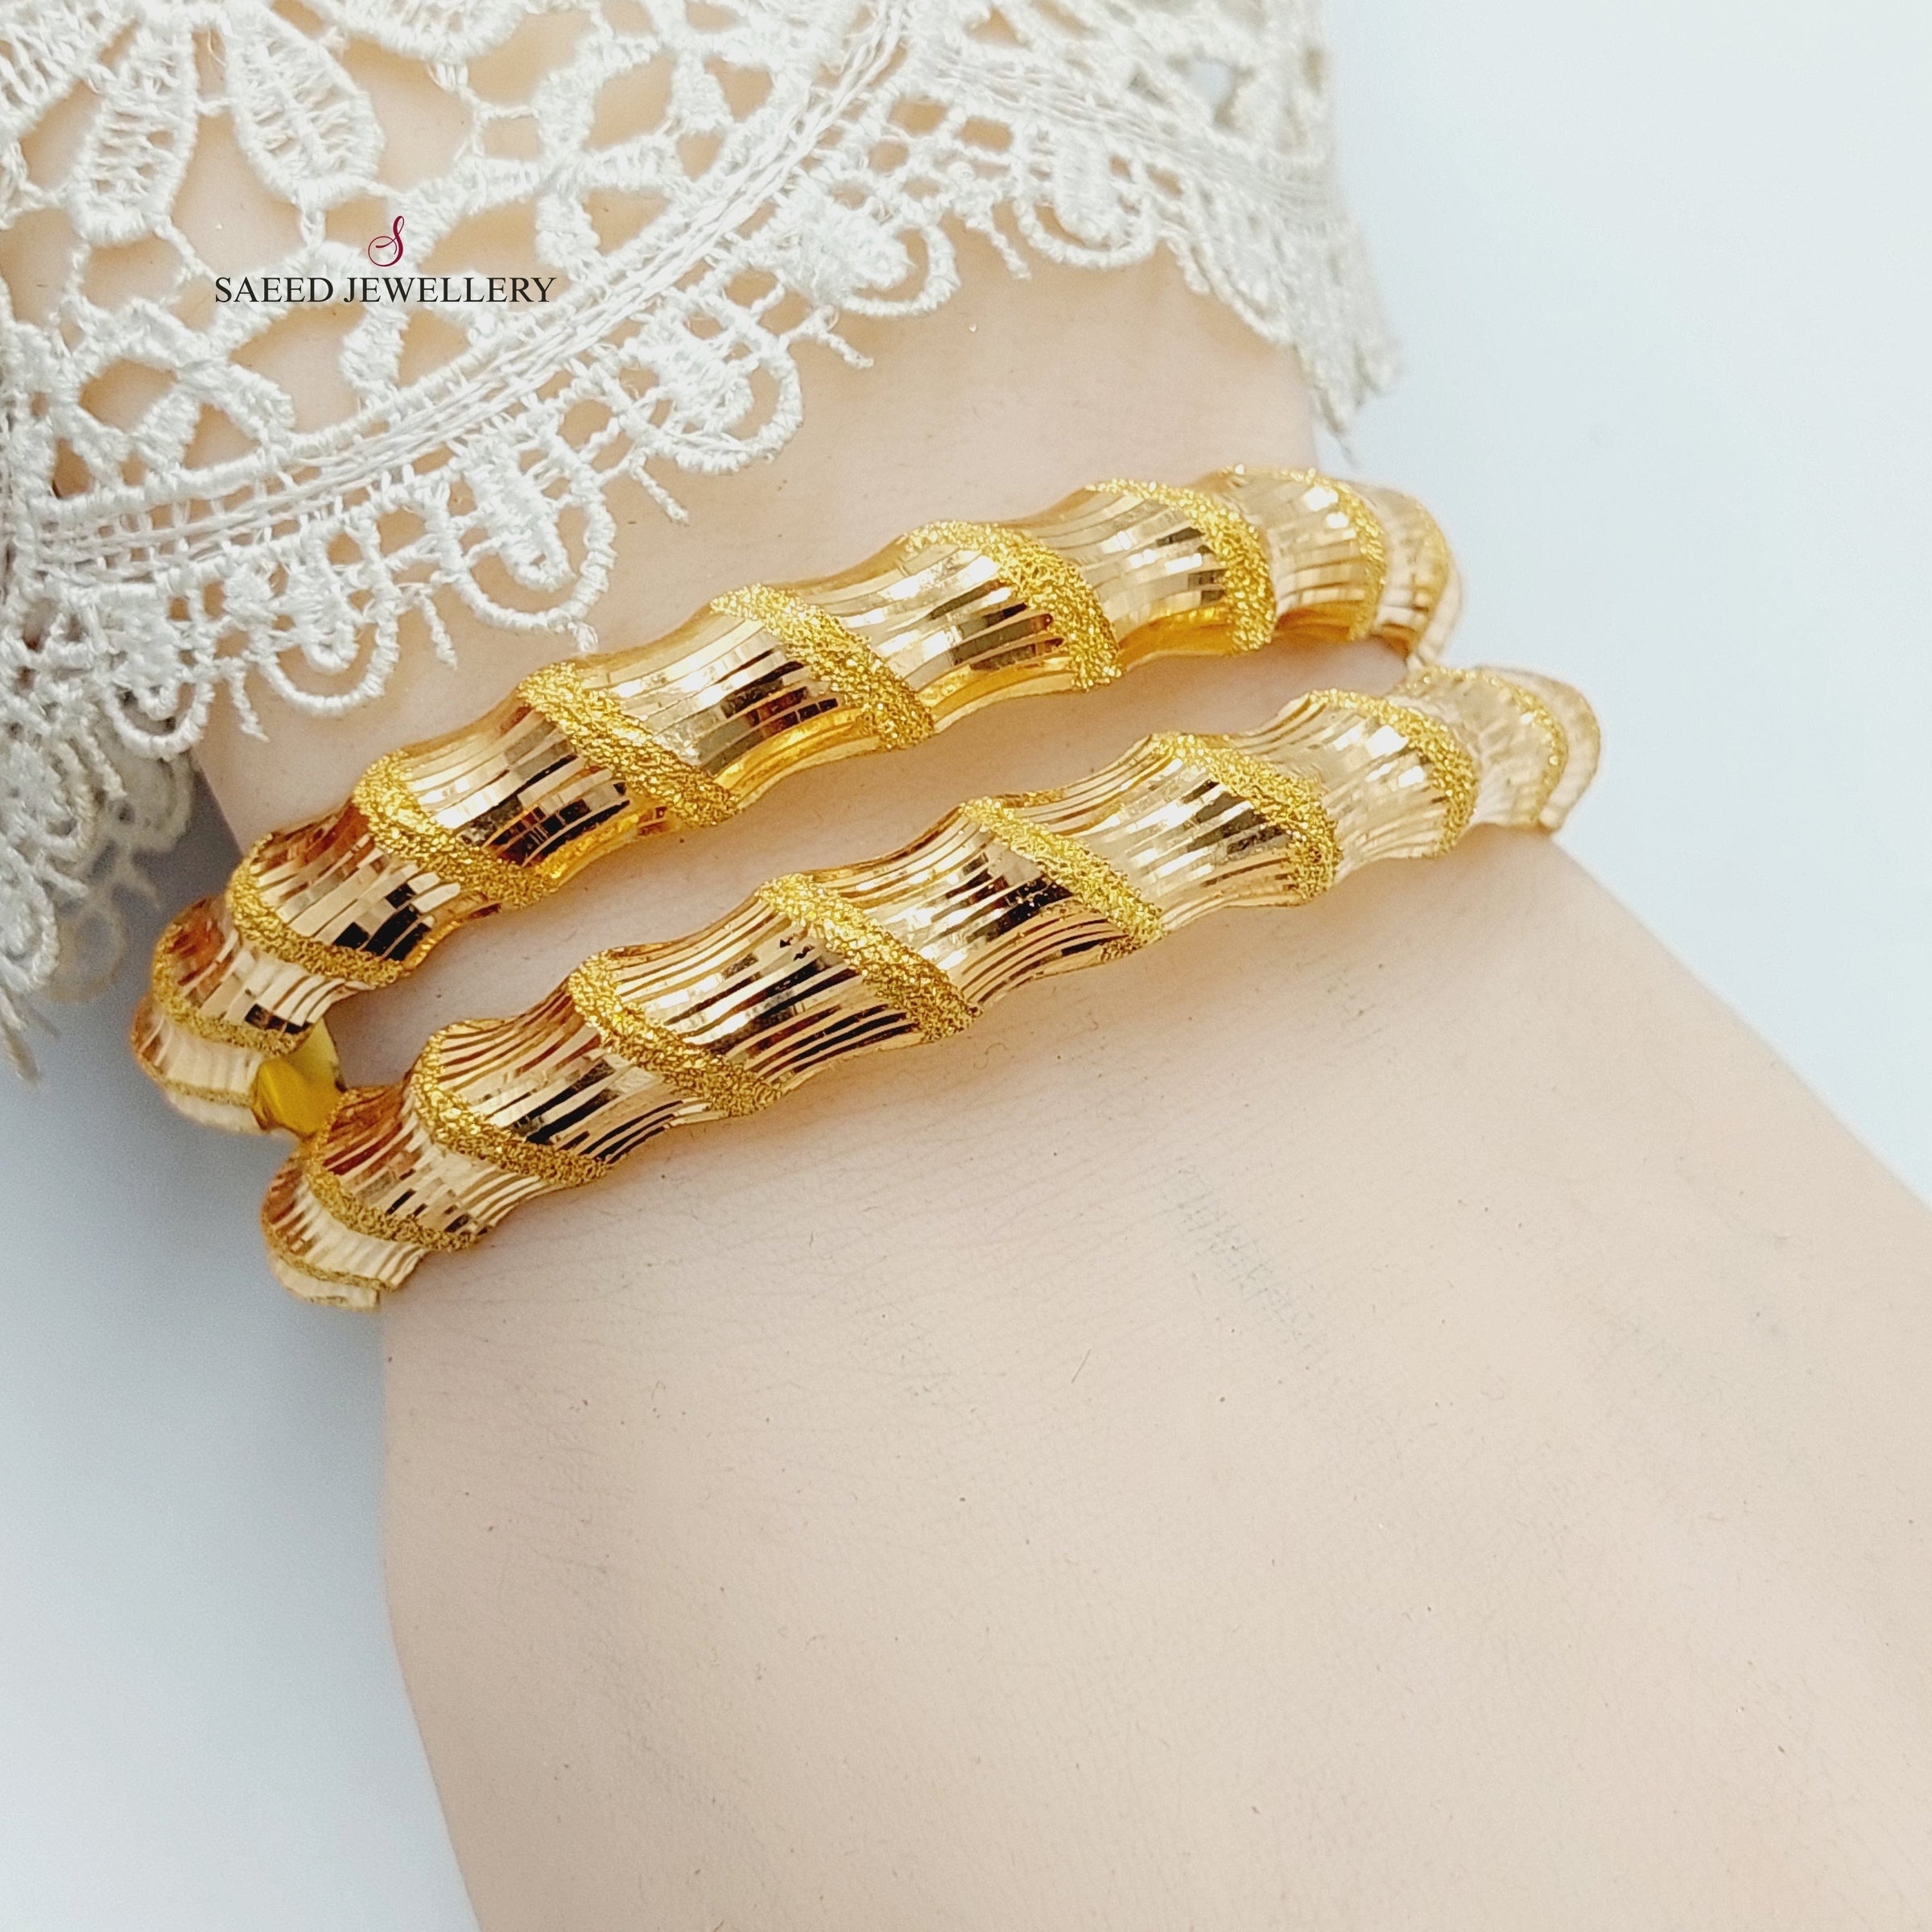 21K Gold Waves Bangle by Saeed Jewelry - Image 4